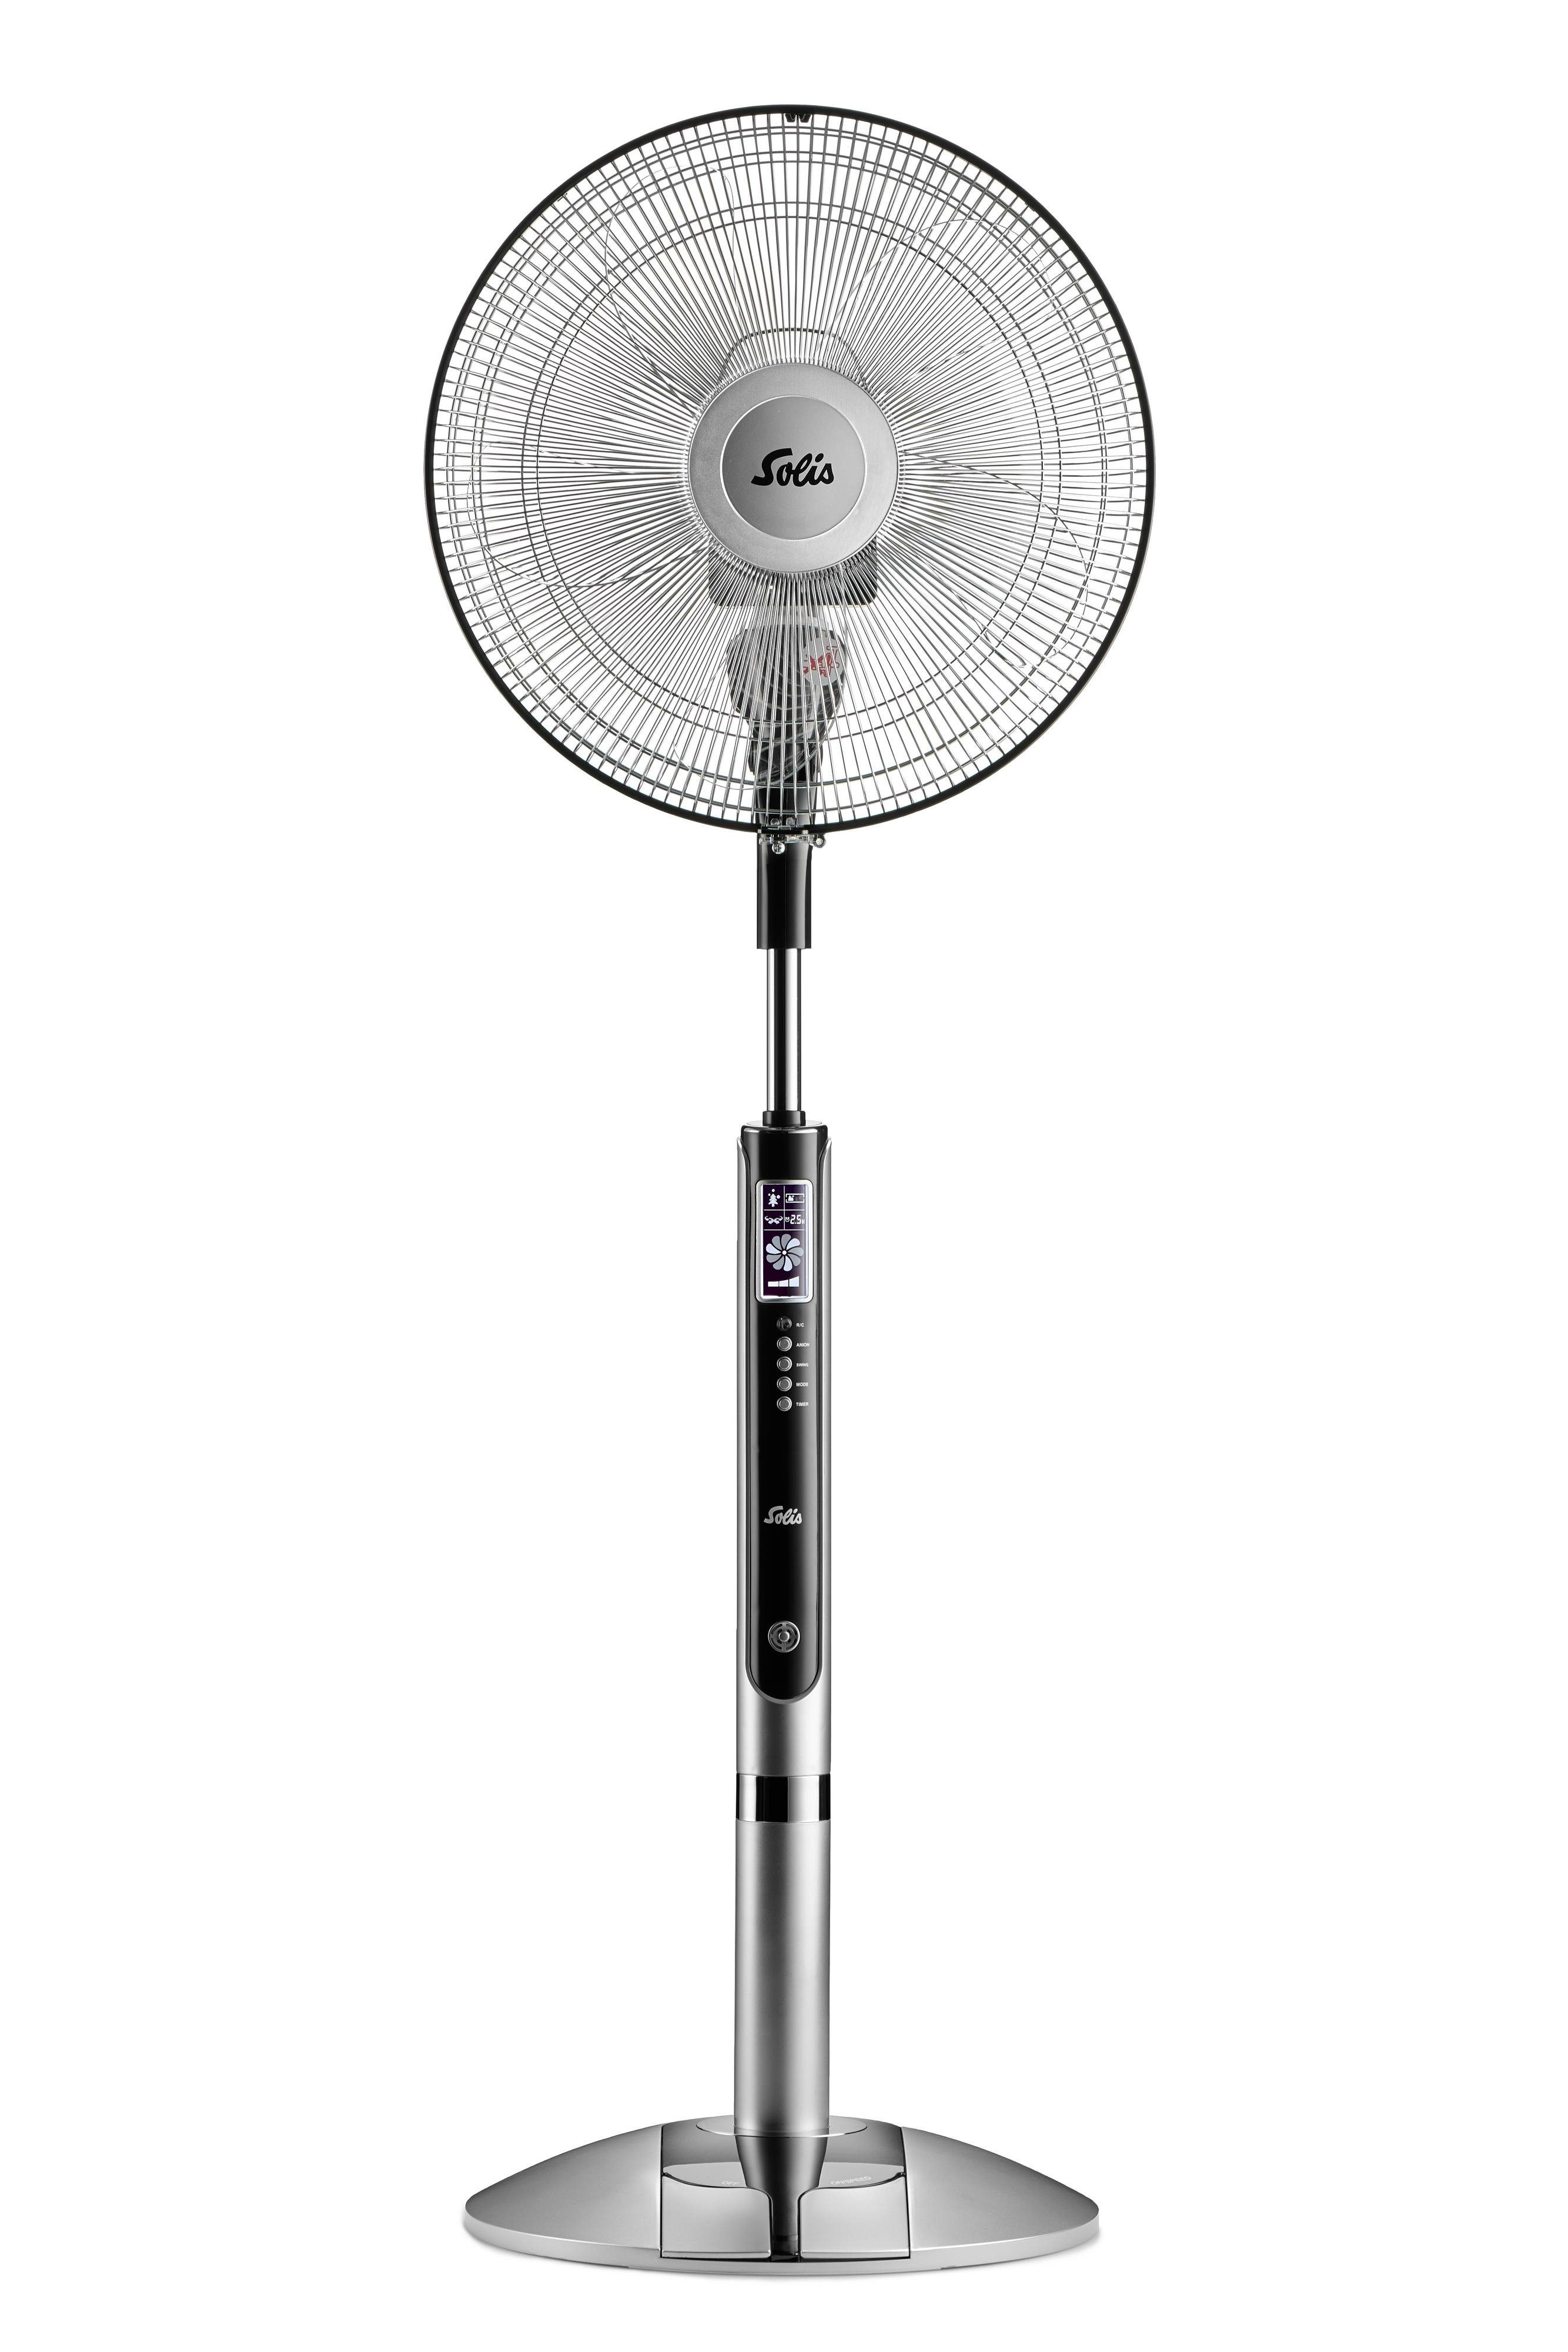 SOLIS OF SWITZERLAND Standventilator Fan-Tastic, Typ 750, Timer, 60 W, 3 Stufen, Oszillationsfunktion, 67 dB